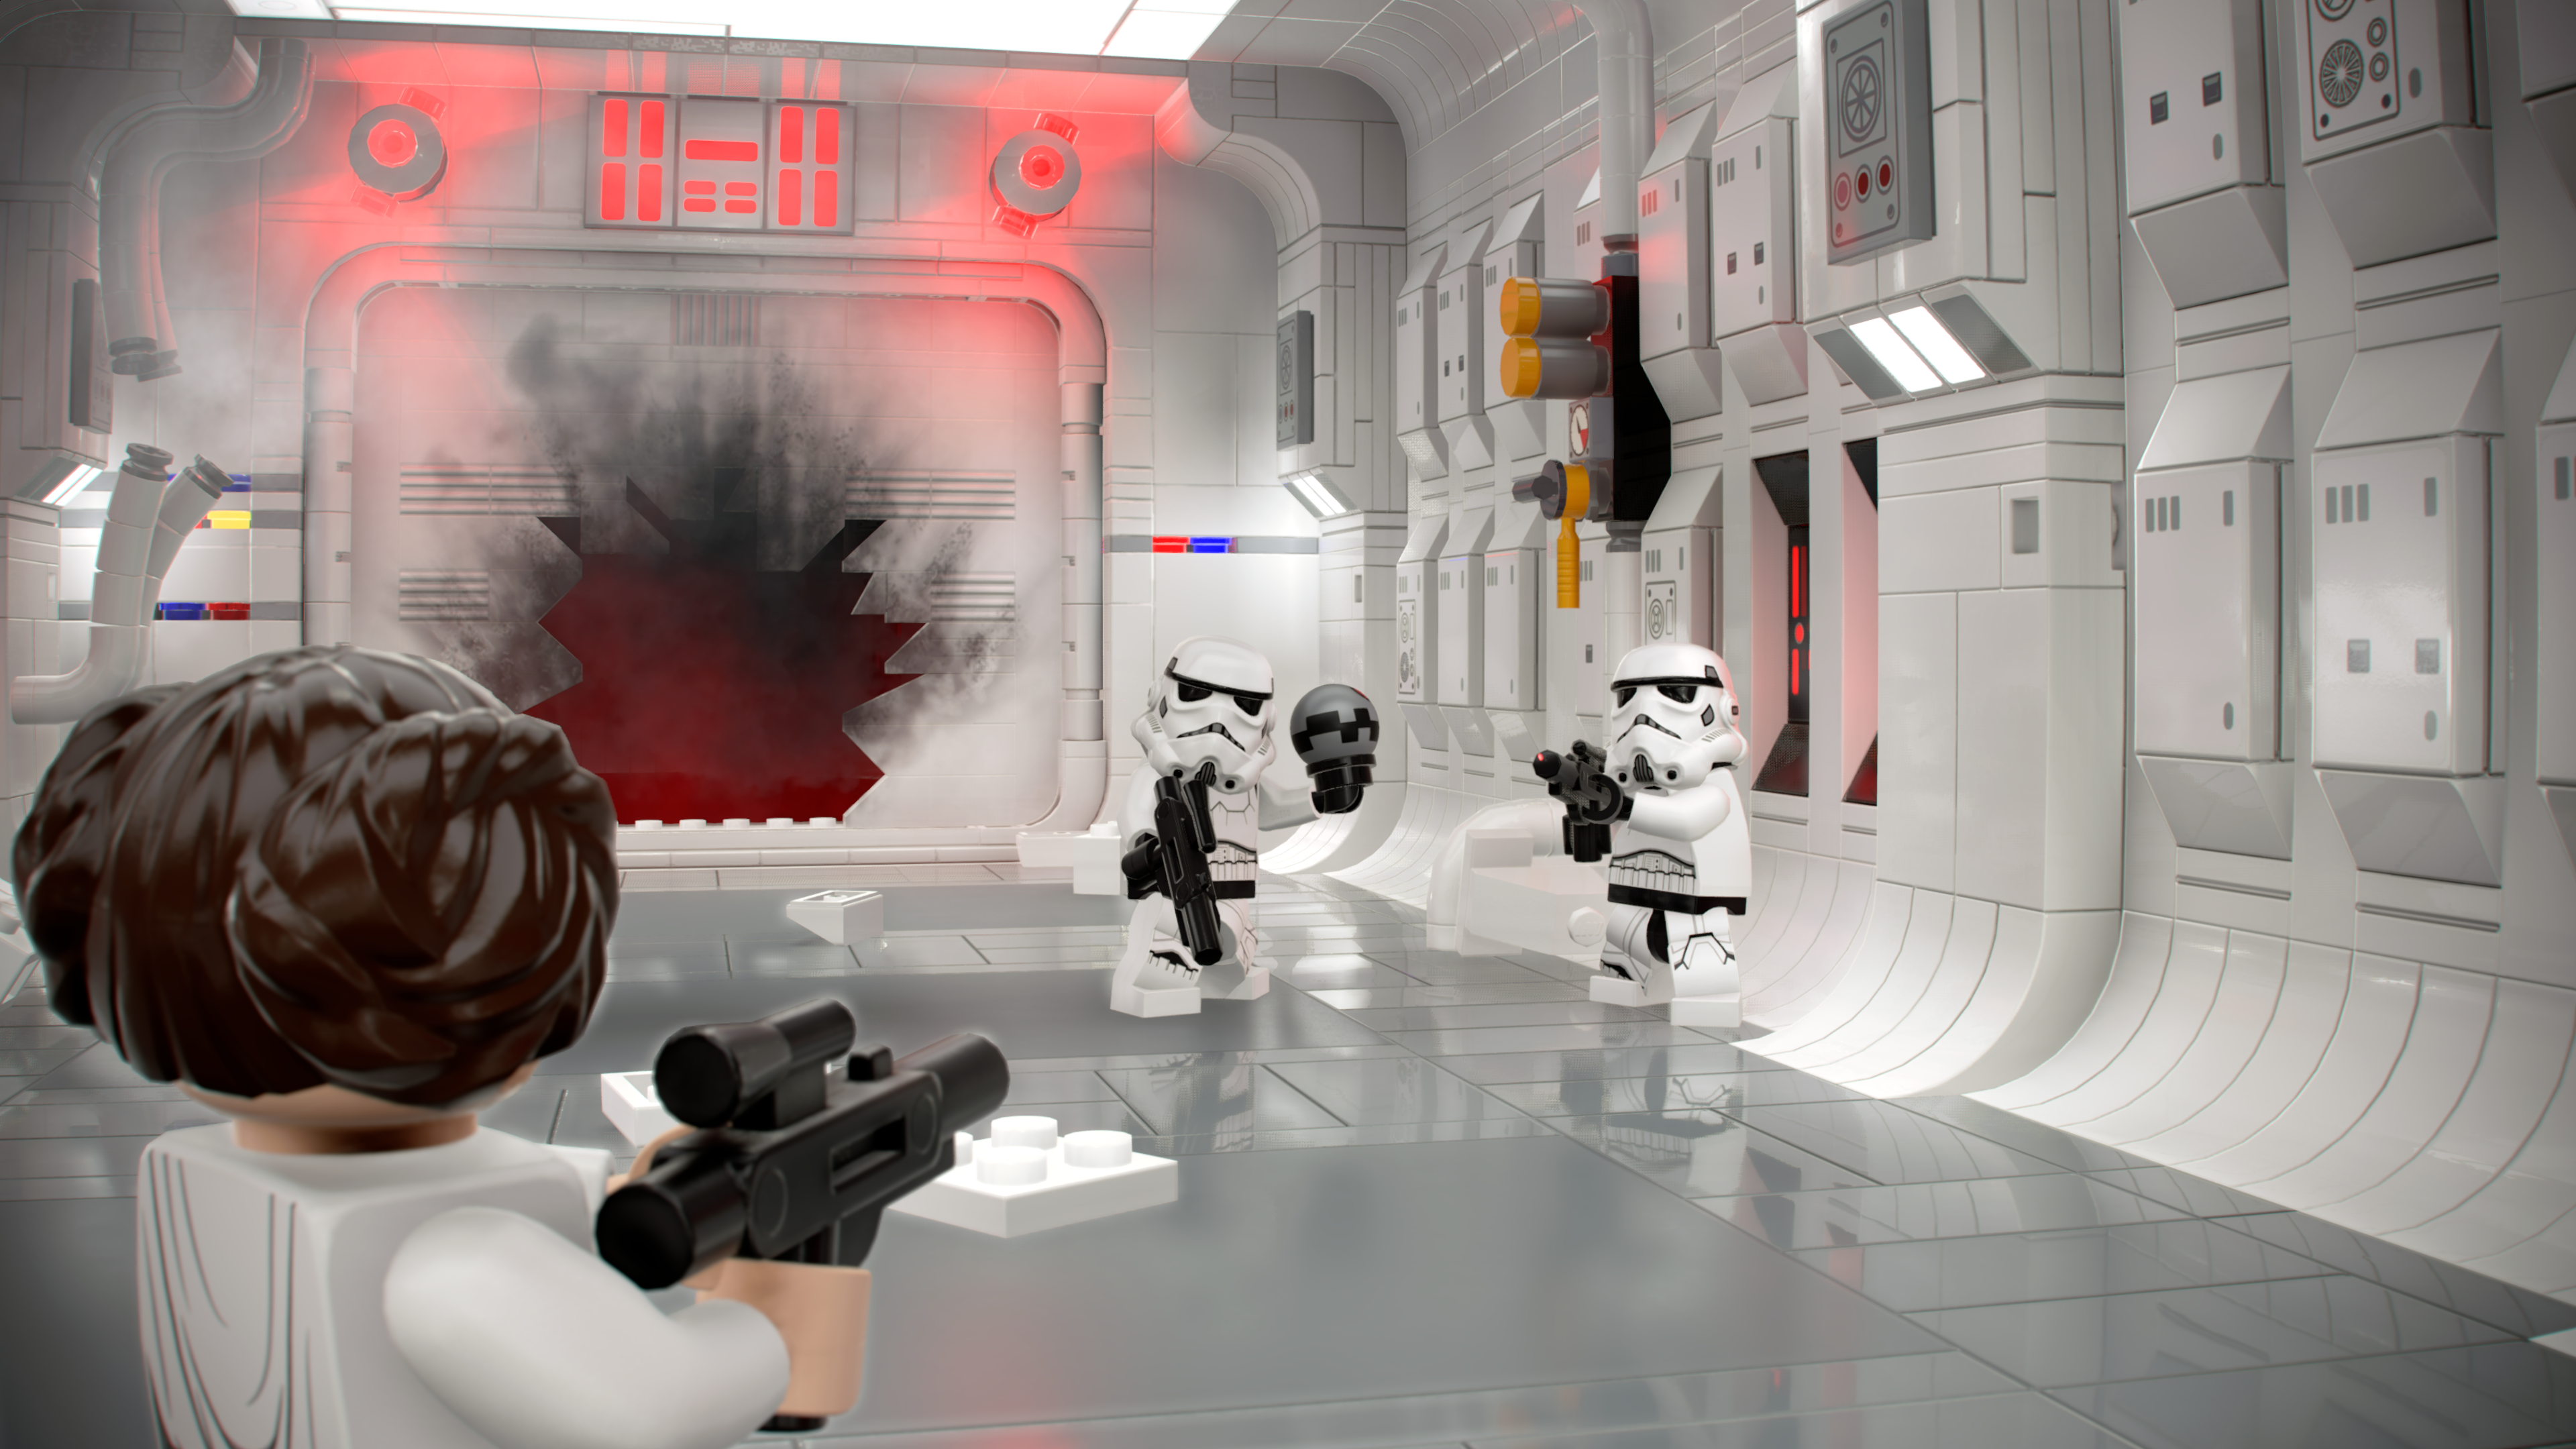 LEGO Star Wars The Skywalker Saga system requirements